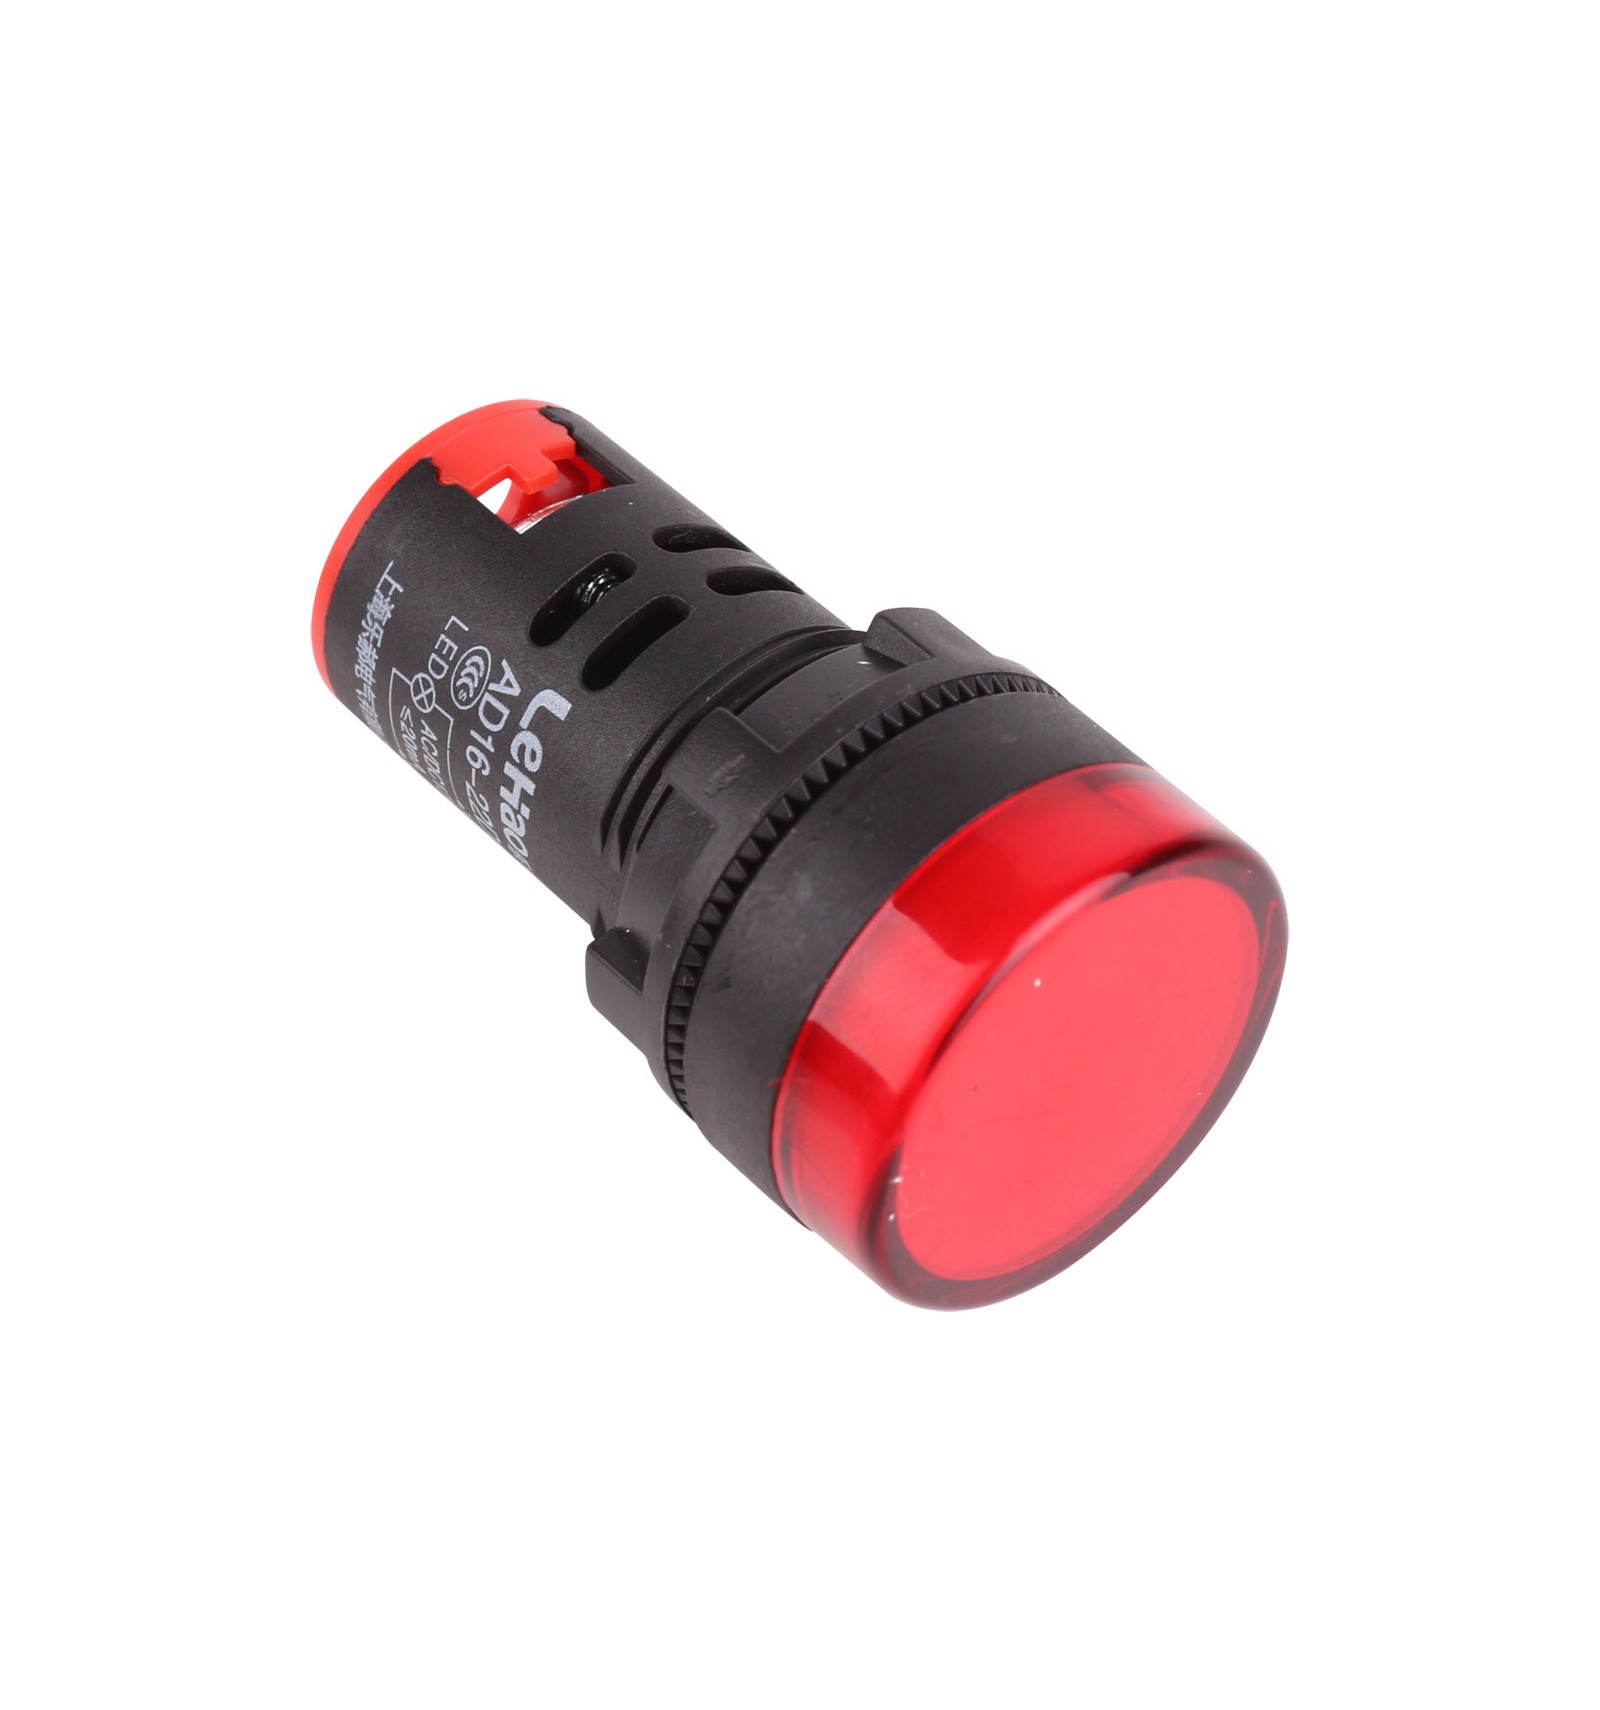 https://www.diyelectronics.co.za/store/8886-thickbox_default/12v-led-signal-light-red.jpg